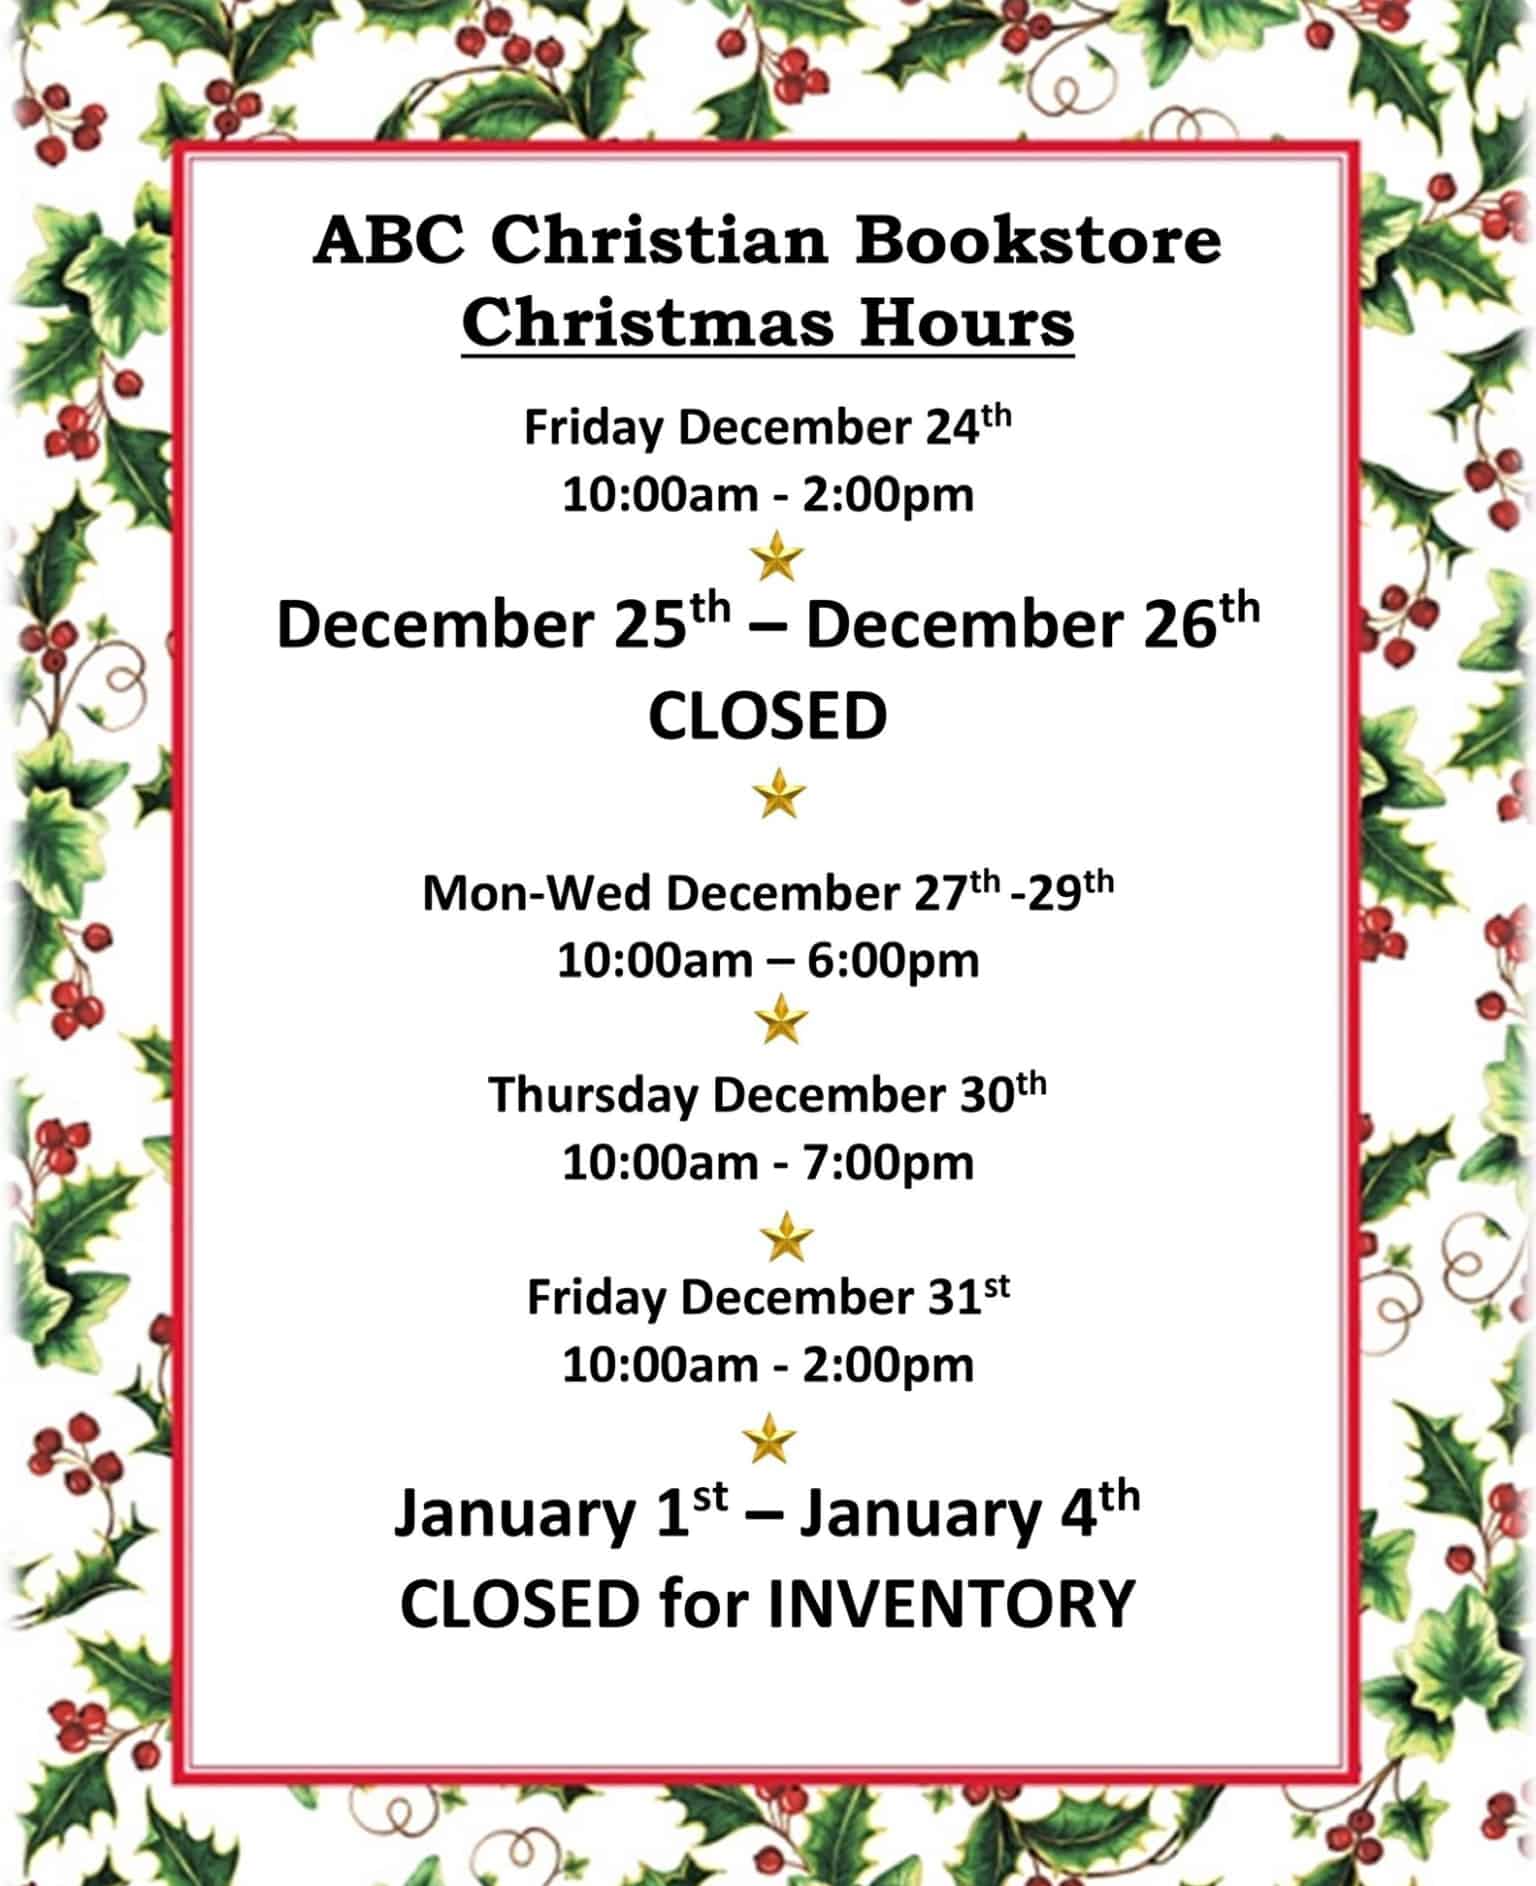 ABC Christian Bookstore Christmas Hours